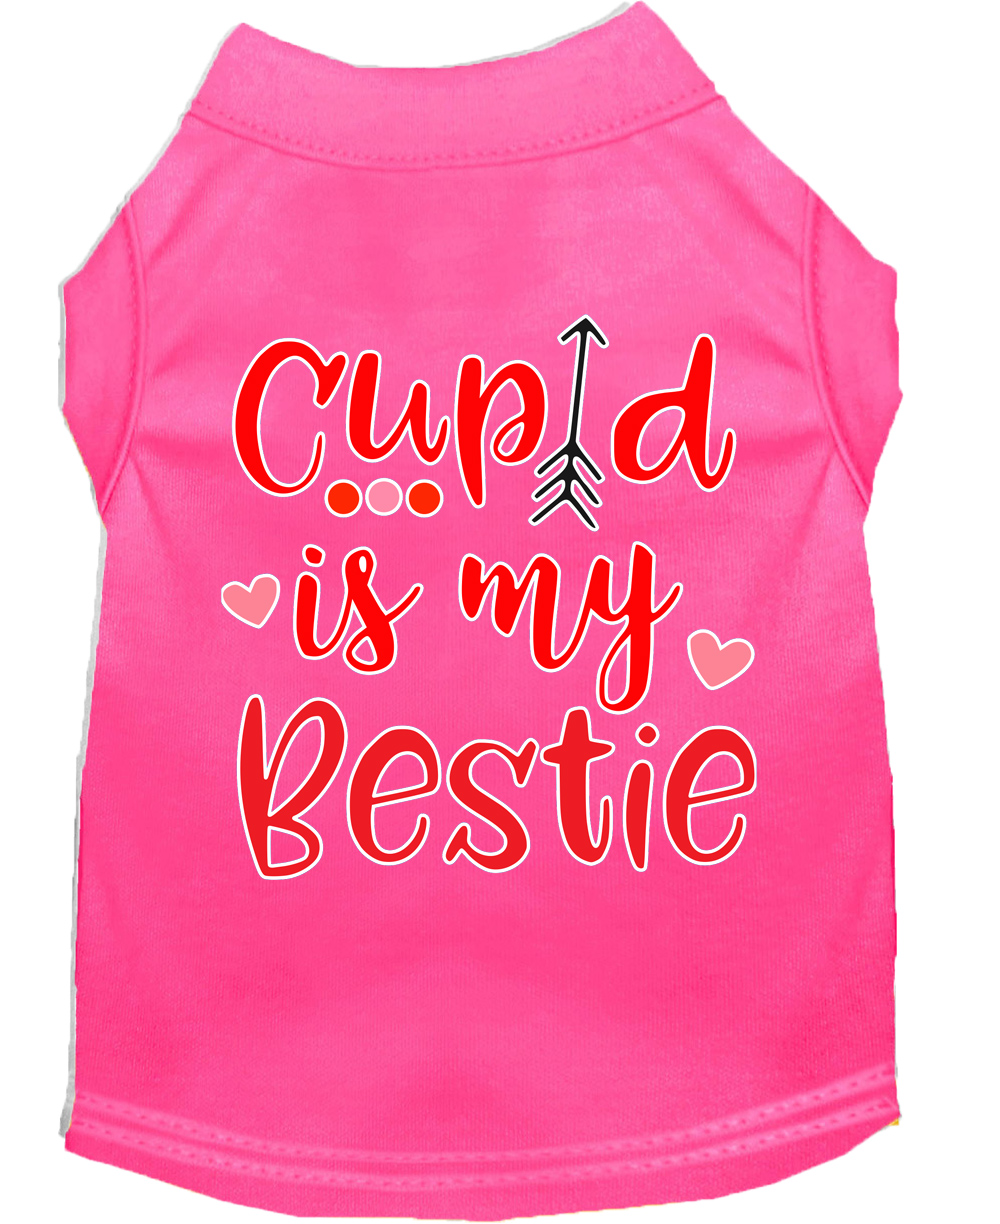 Cupid is my Bestie Screen Print Dog Shirt Bright Pink XL